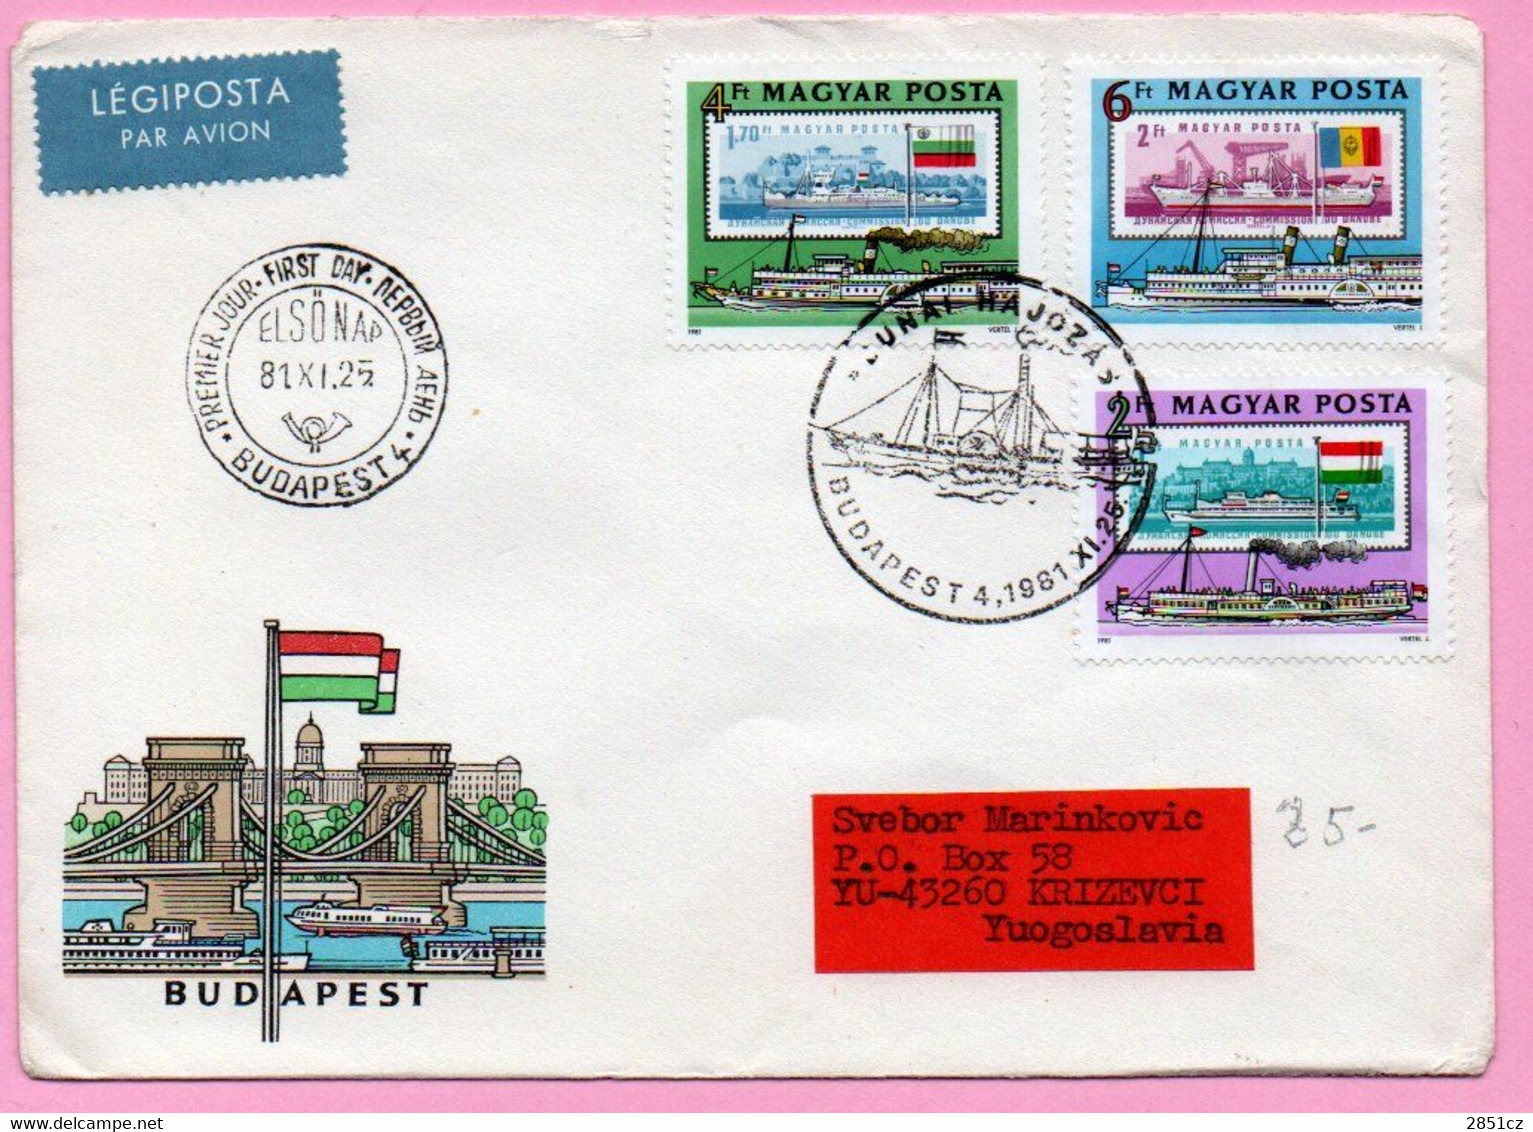 Letter - Stamp Ships / Postmark Premier Jour/First Day/Dunai Hajozas, Budapest, 1981., Hungary, Air Mail - Storia Postale